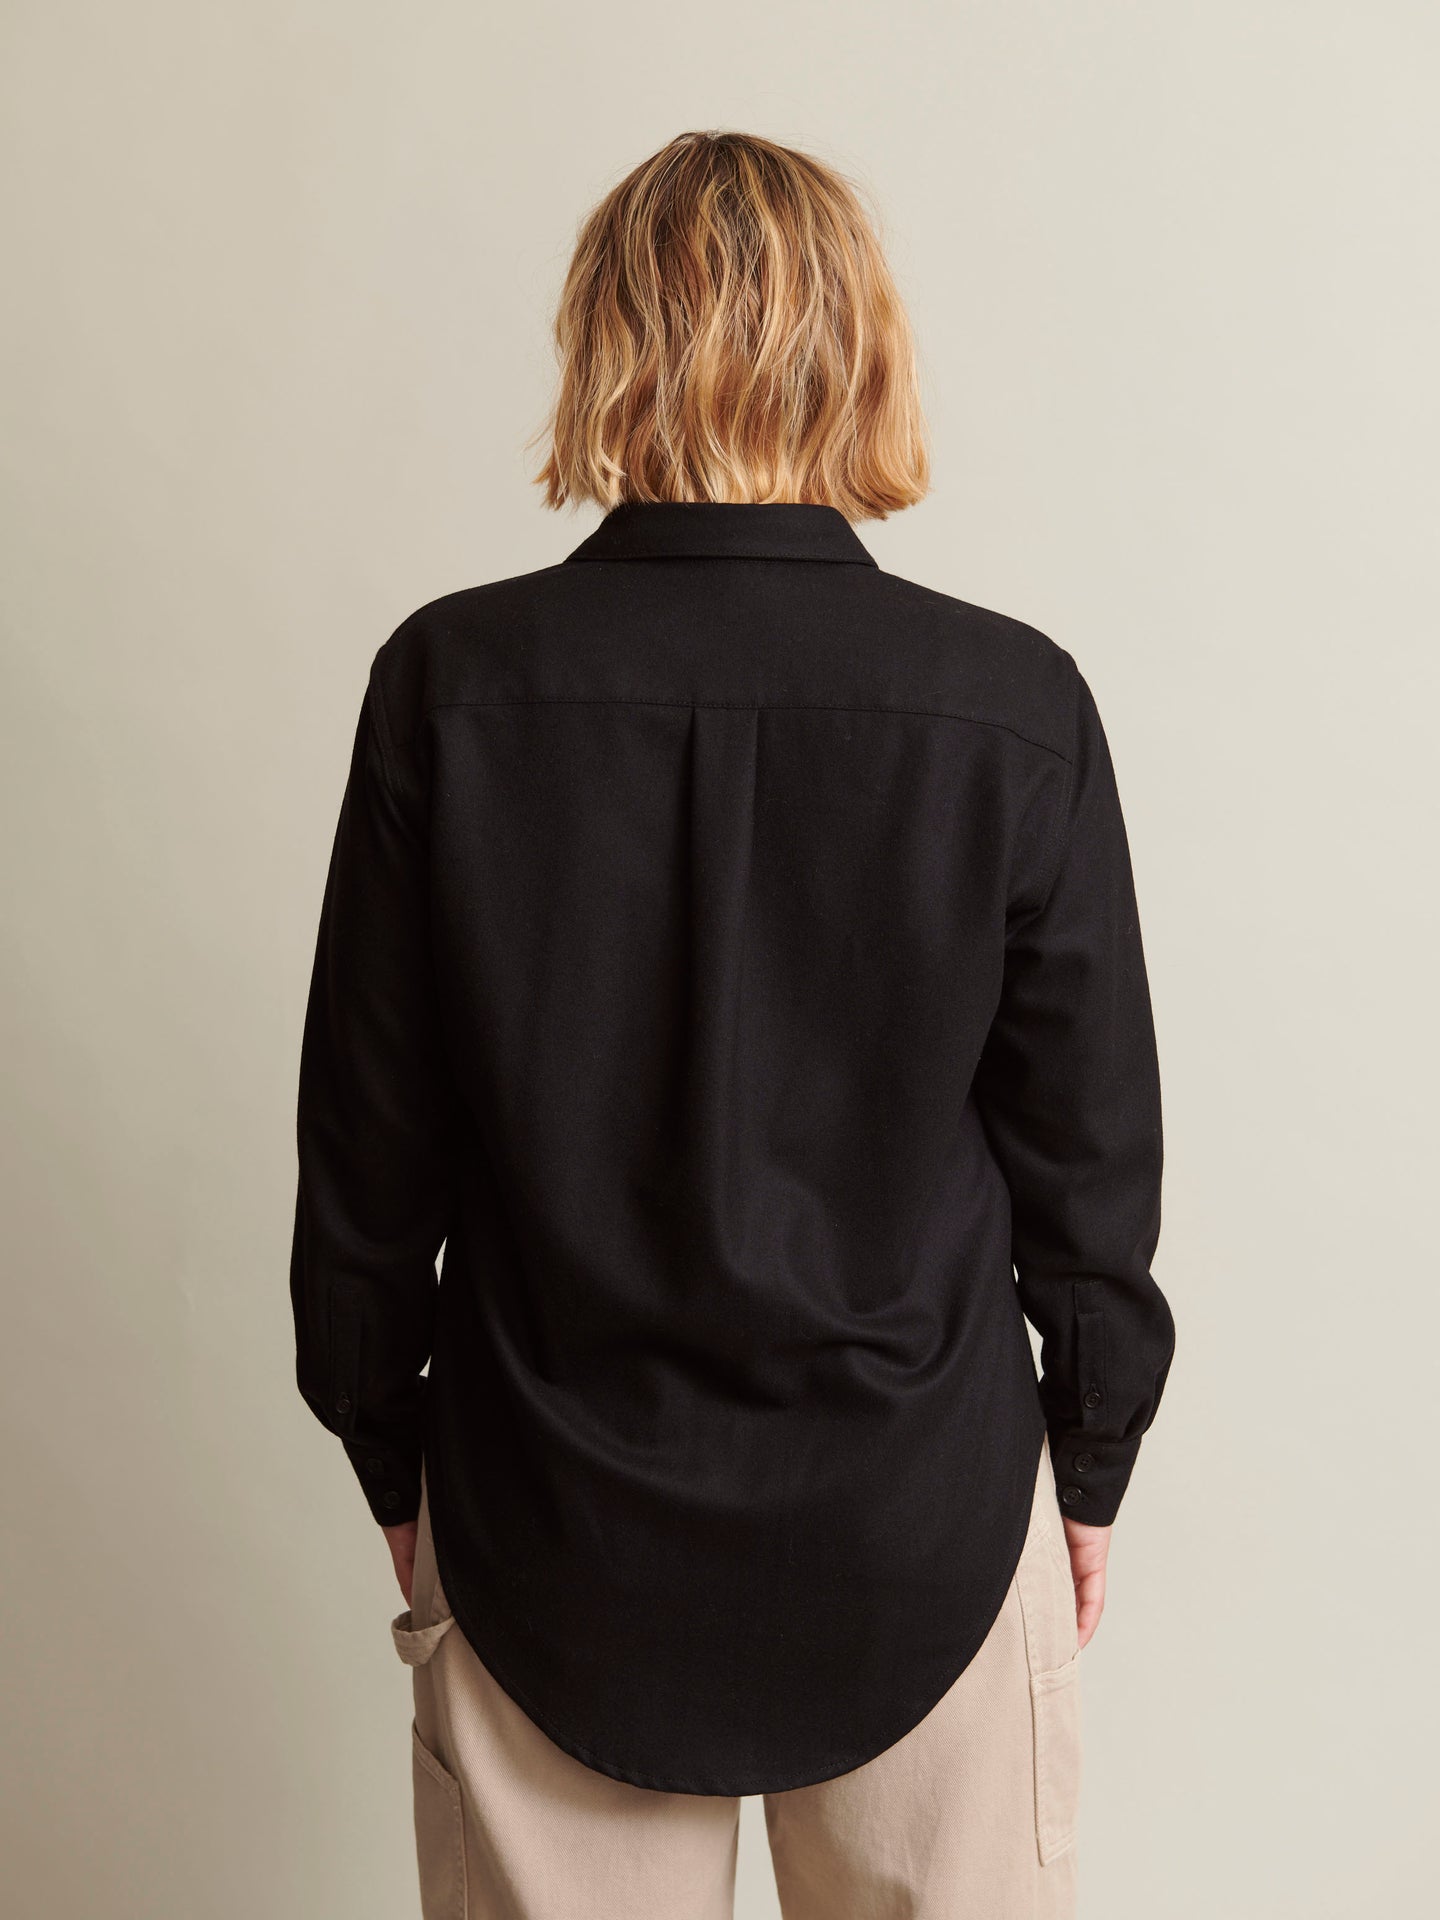 The New Oxford Shirt in 'Enamel' Black Merino Wool | NAOMI NOMI